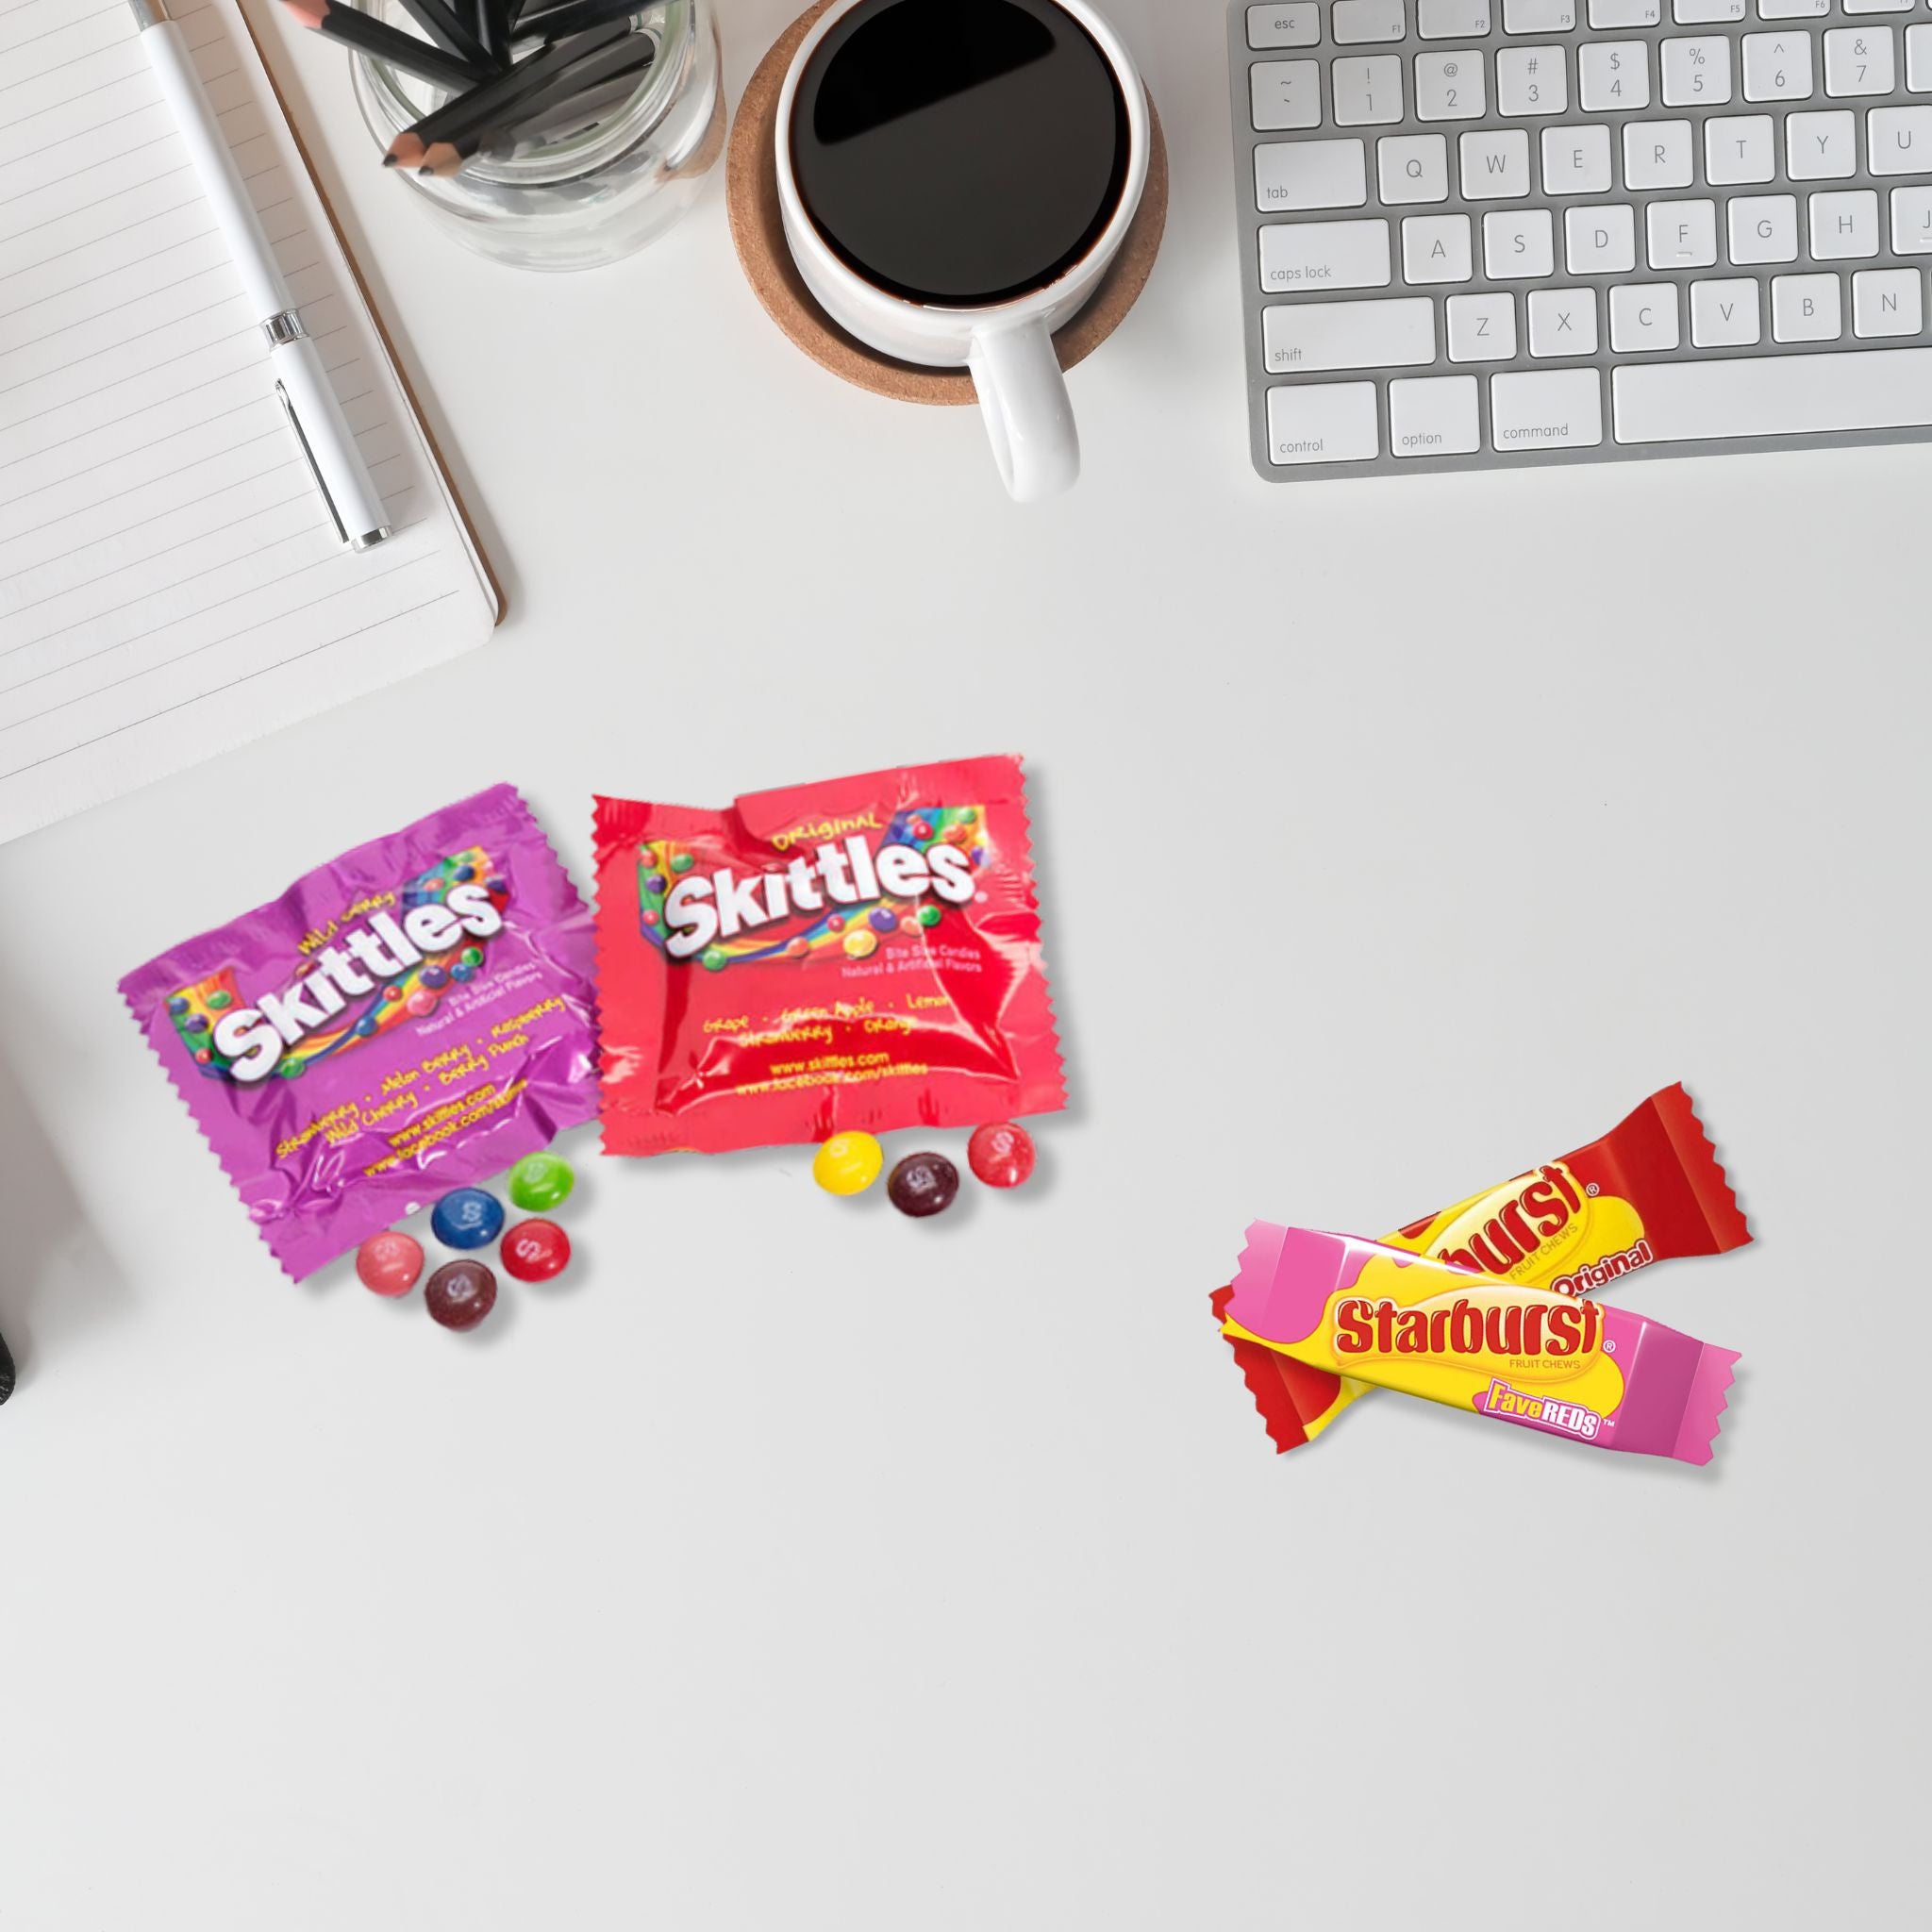 Skittles and Starburst Bulk Candy Mix